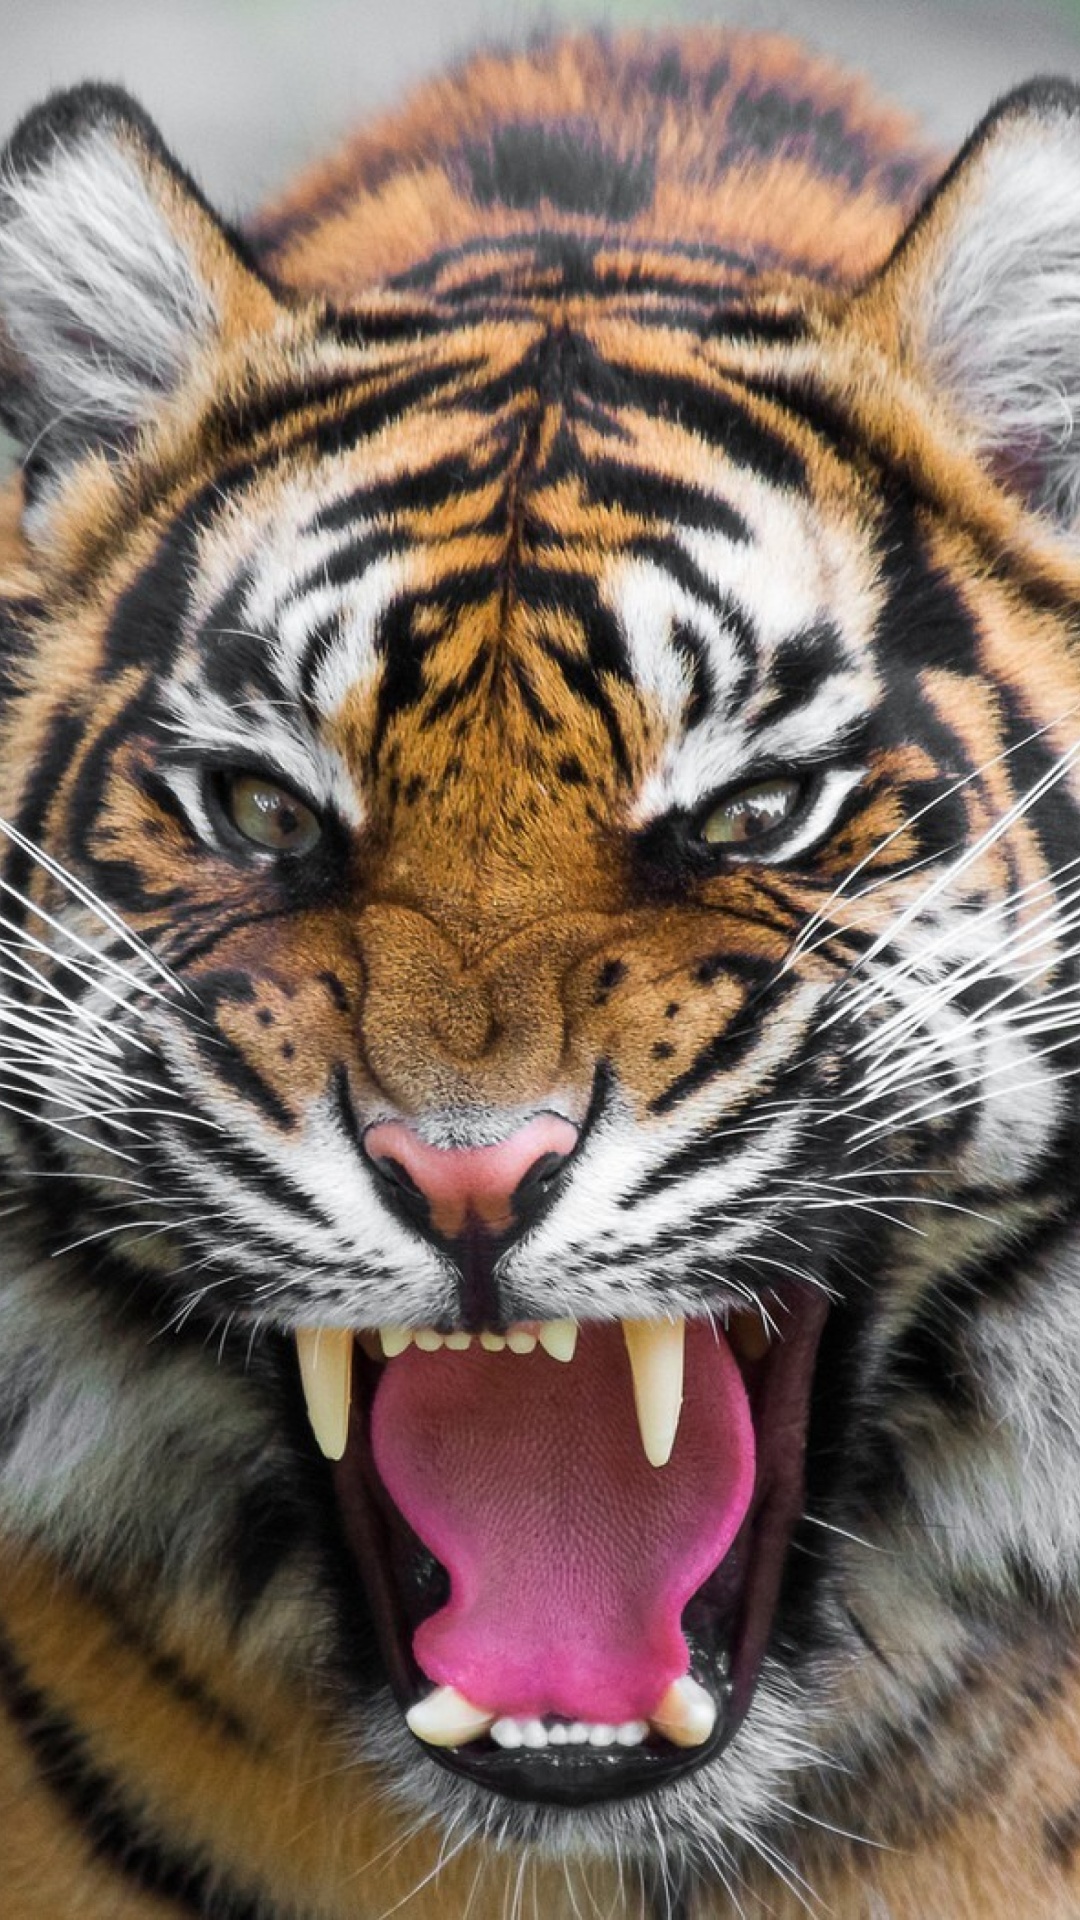 Angry Tiger wallpaper 1080x1920